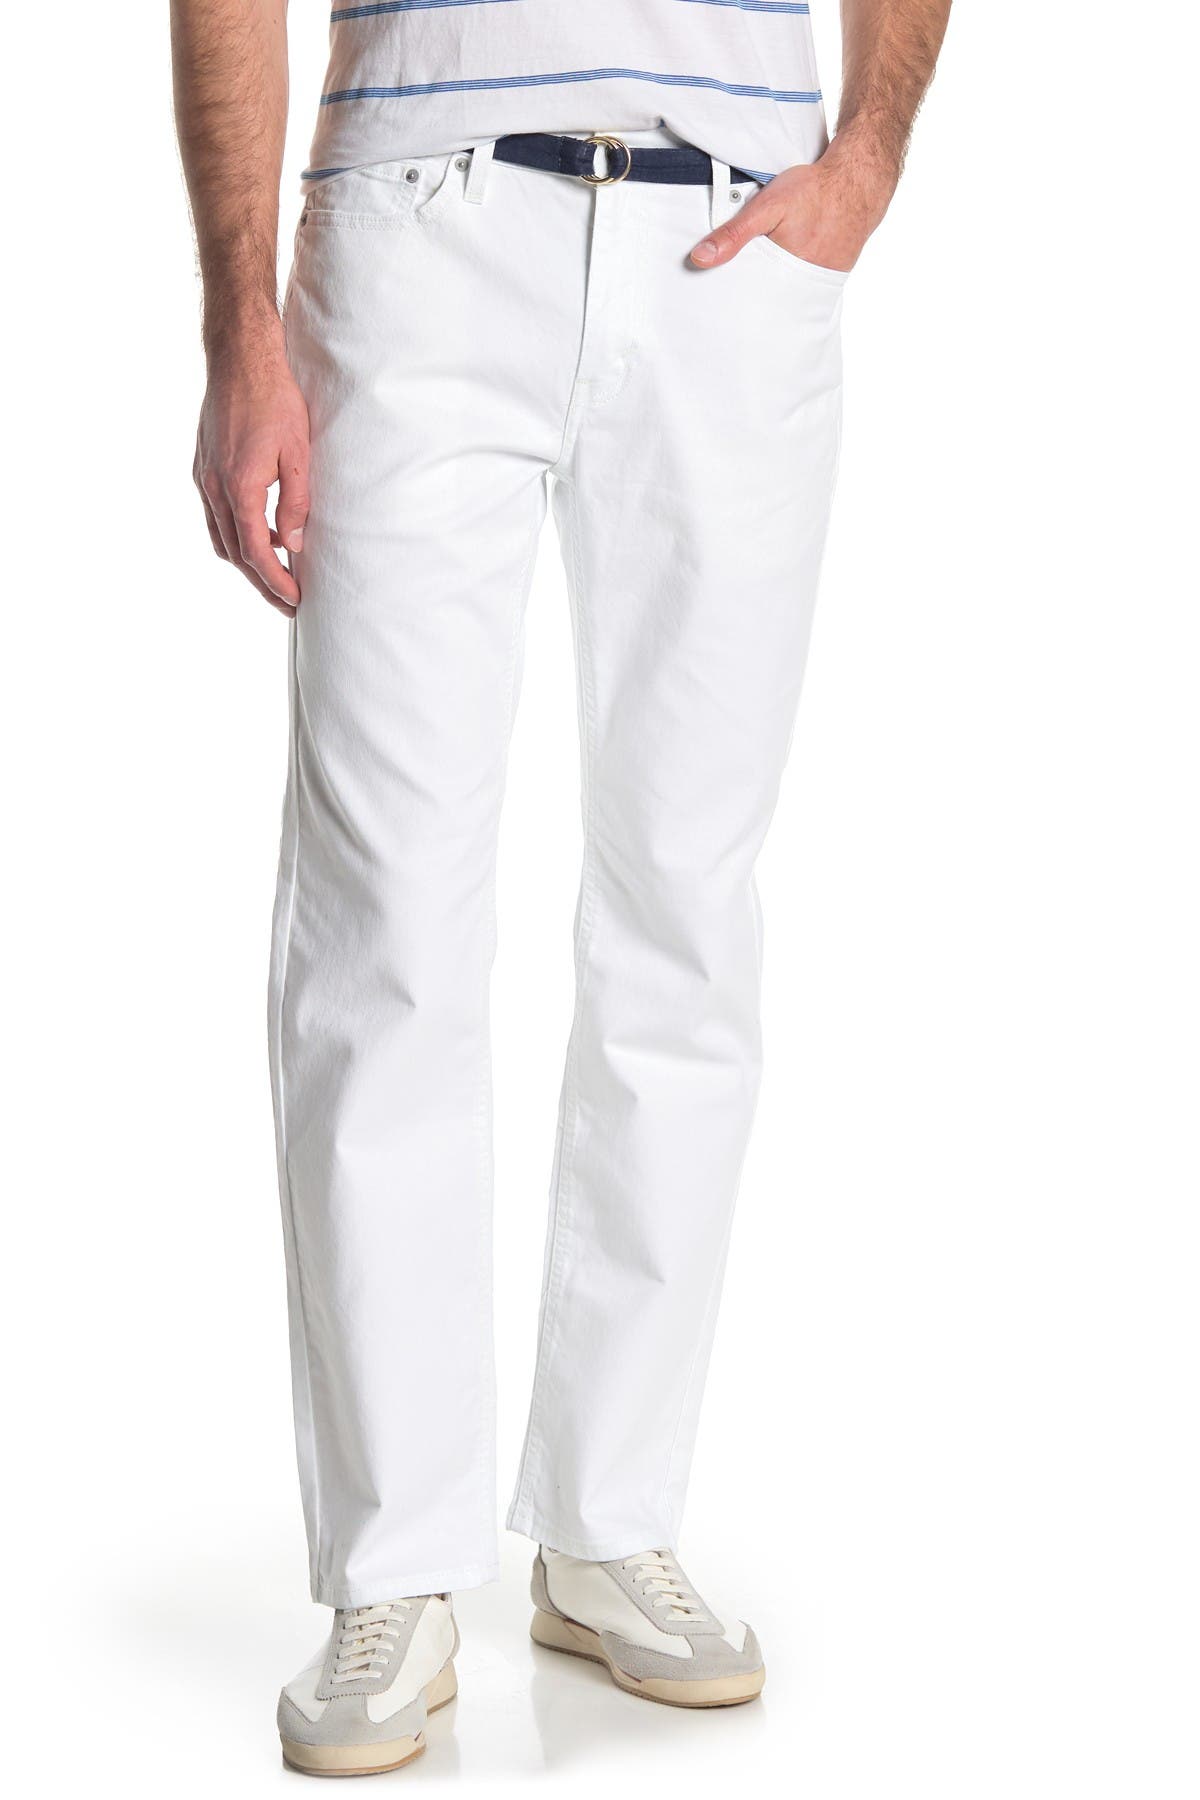 white levi's 541 jeans